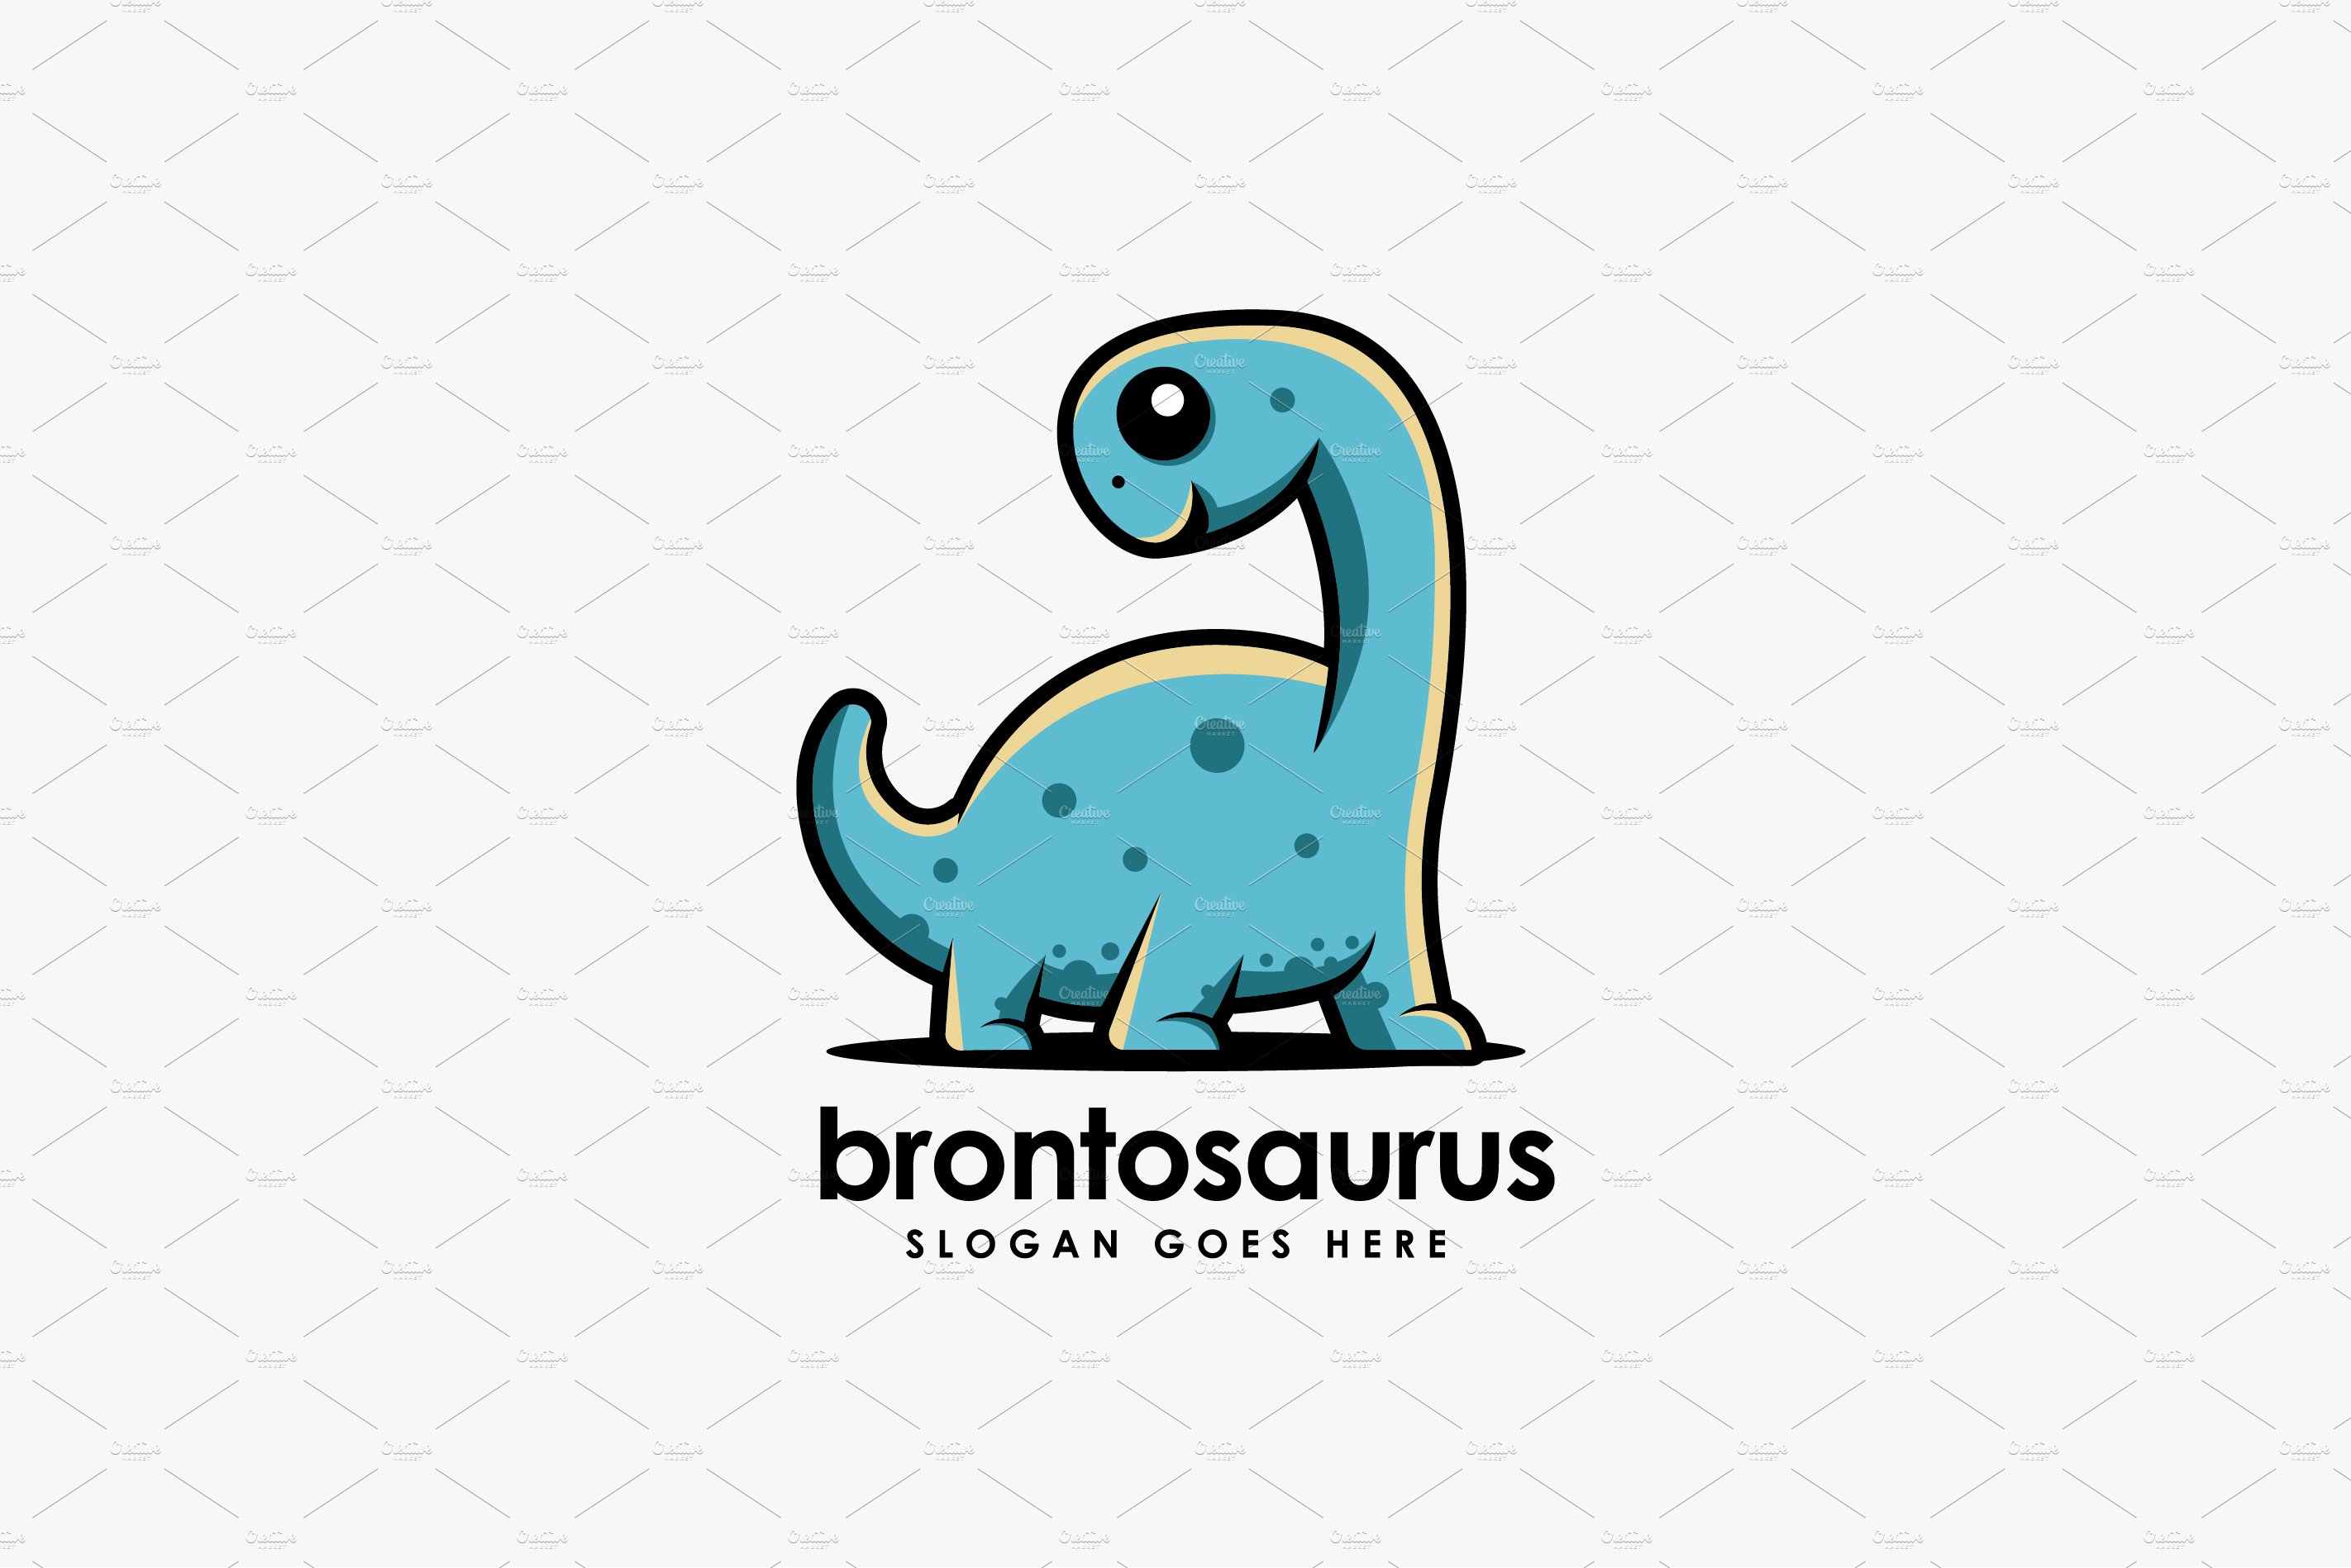 Brontosaurus Dinosaur logo cartoon cover image.